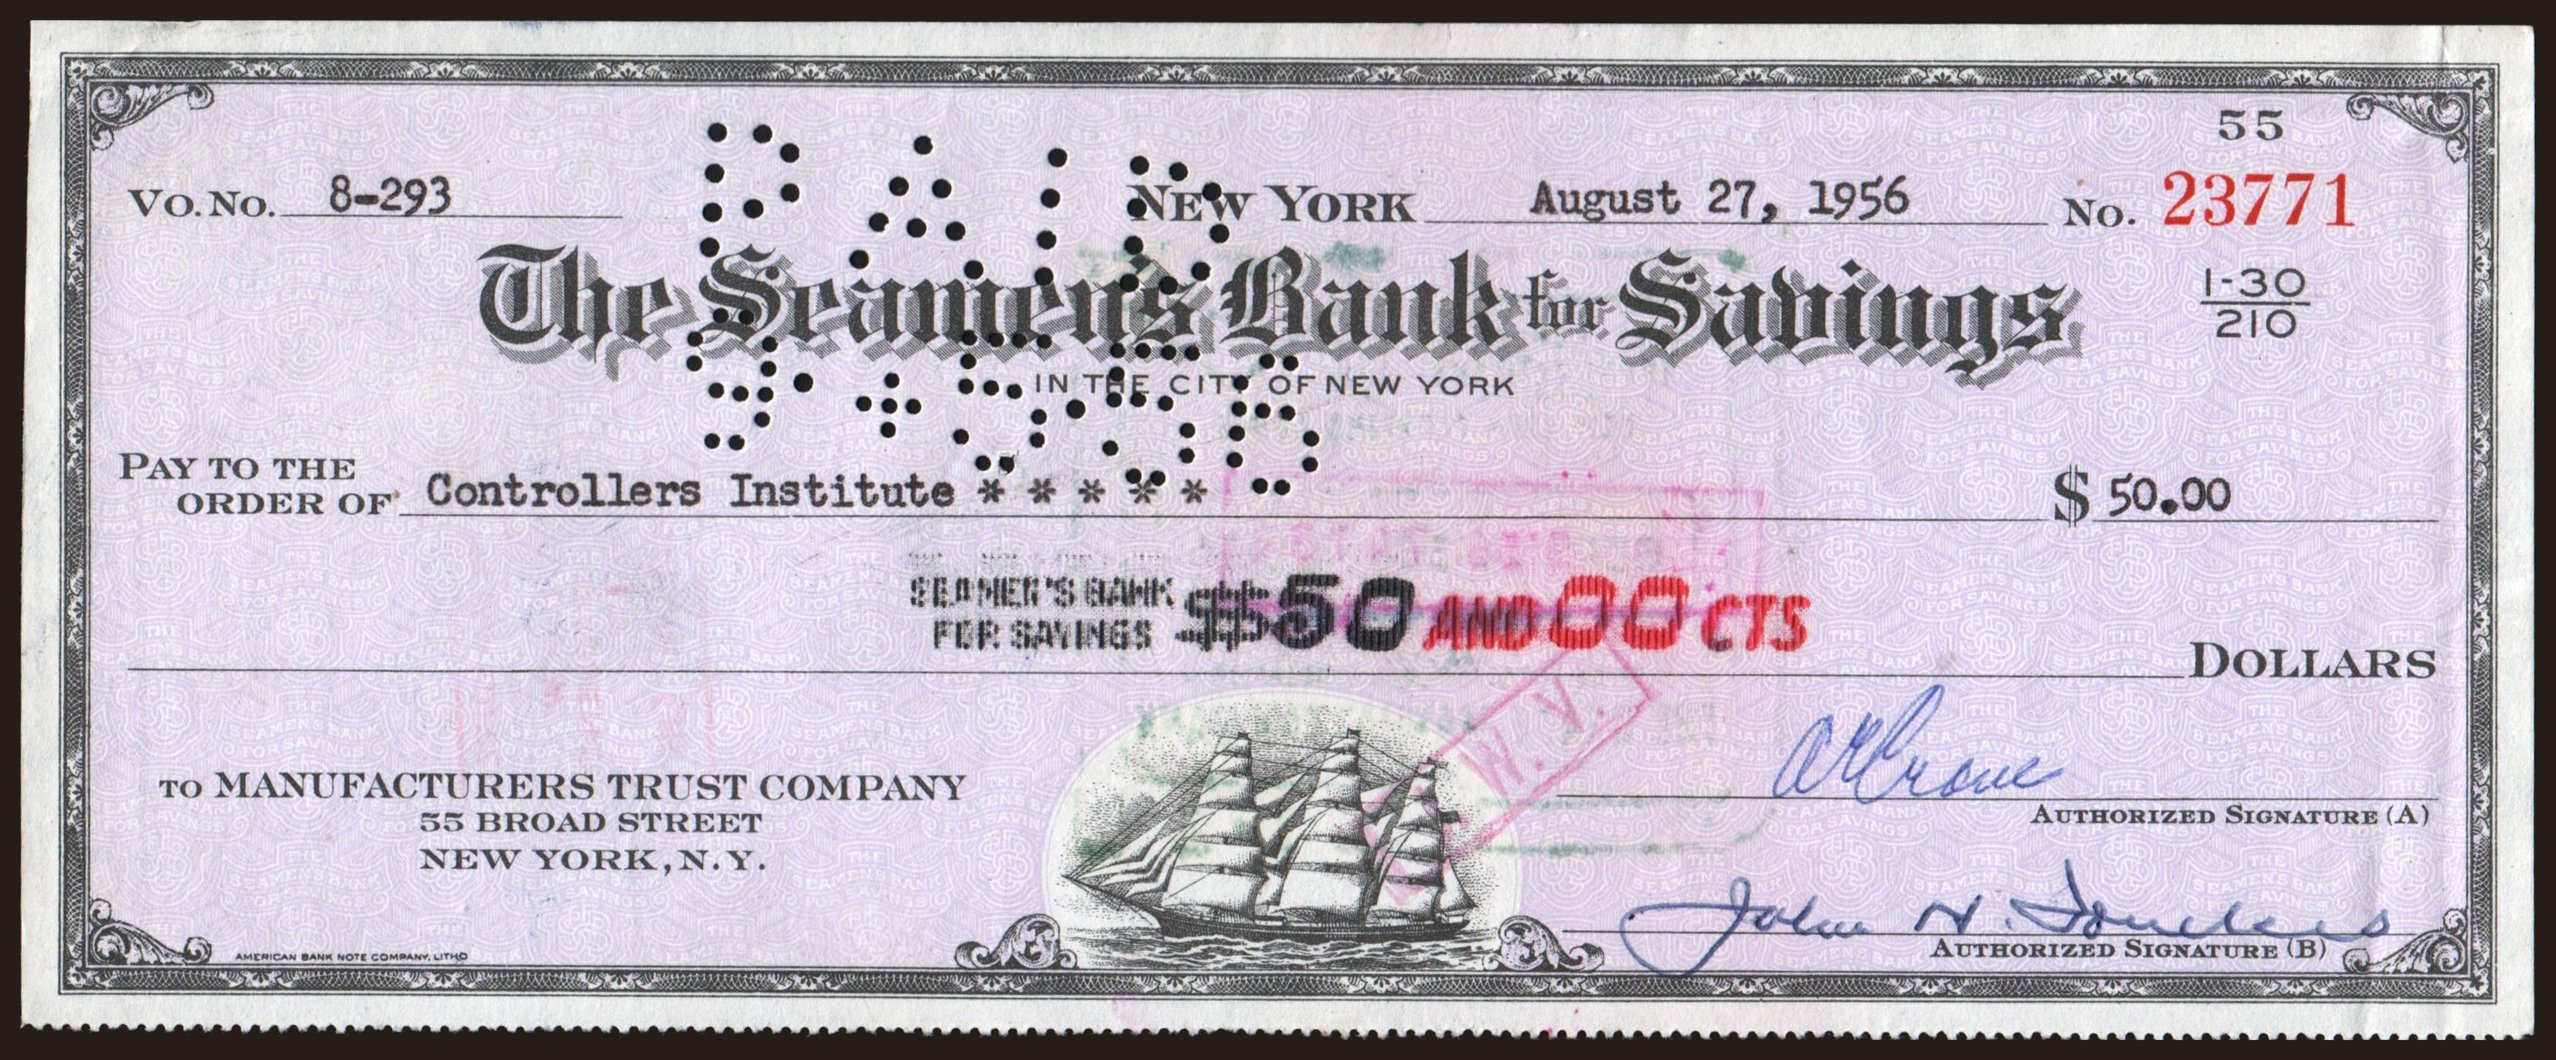 New York, The Seamen s Bank for Savings, 50.00 dollars, 1956